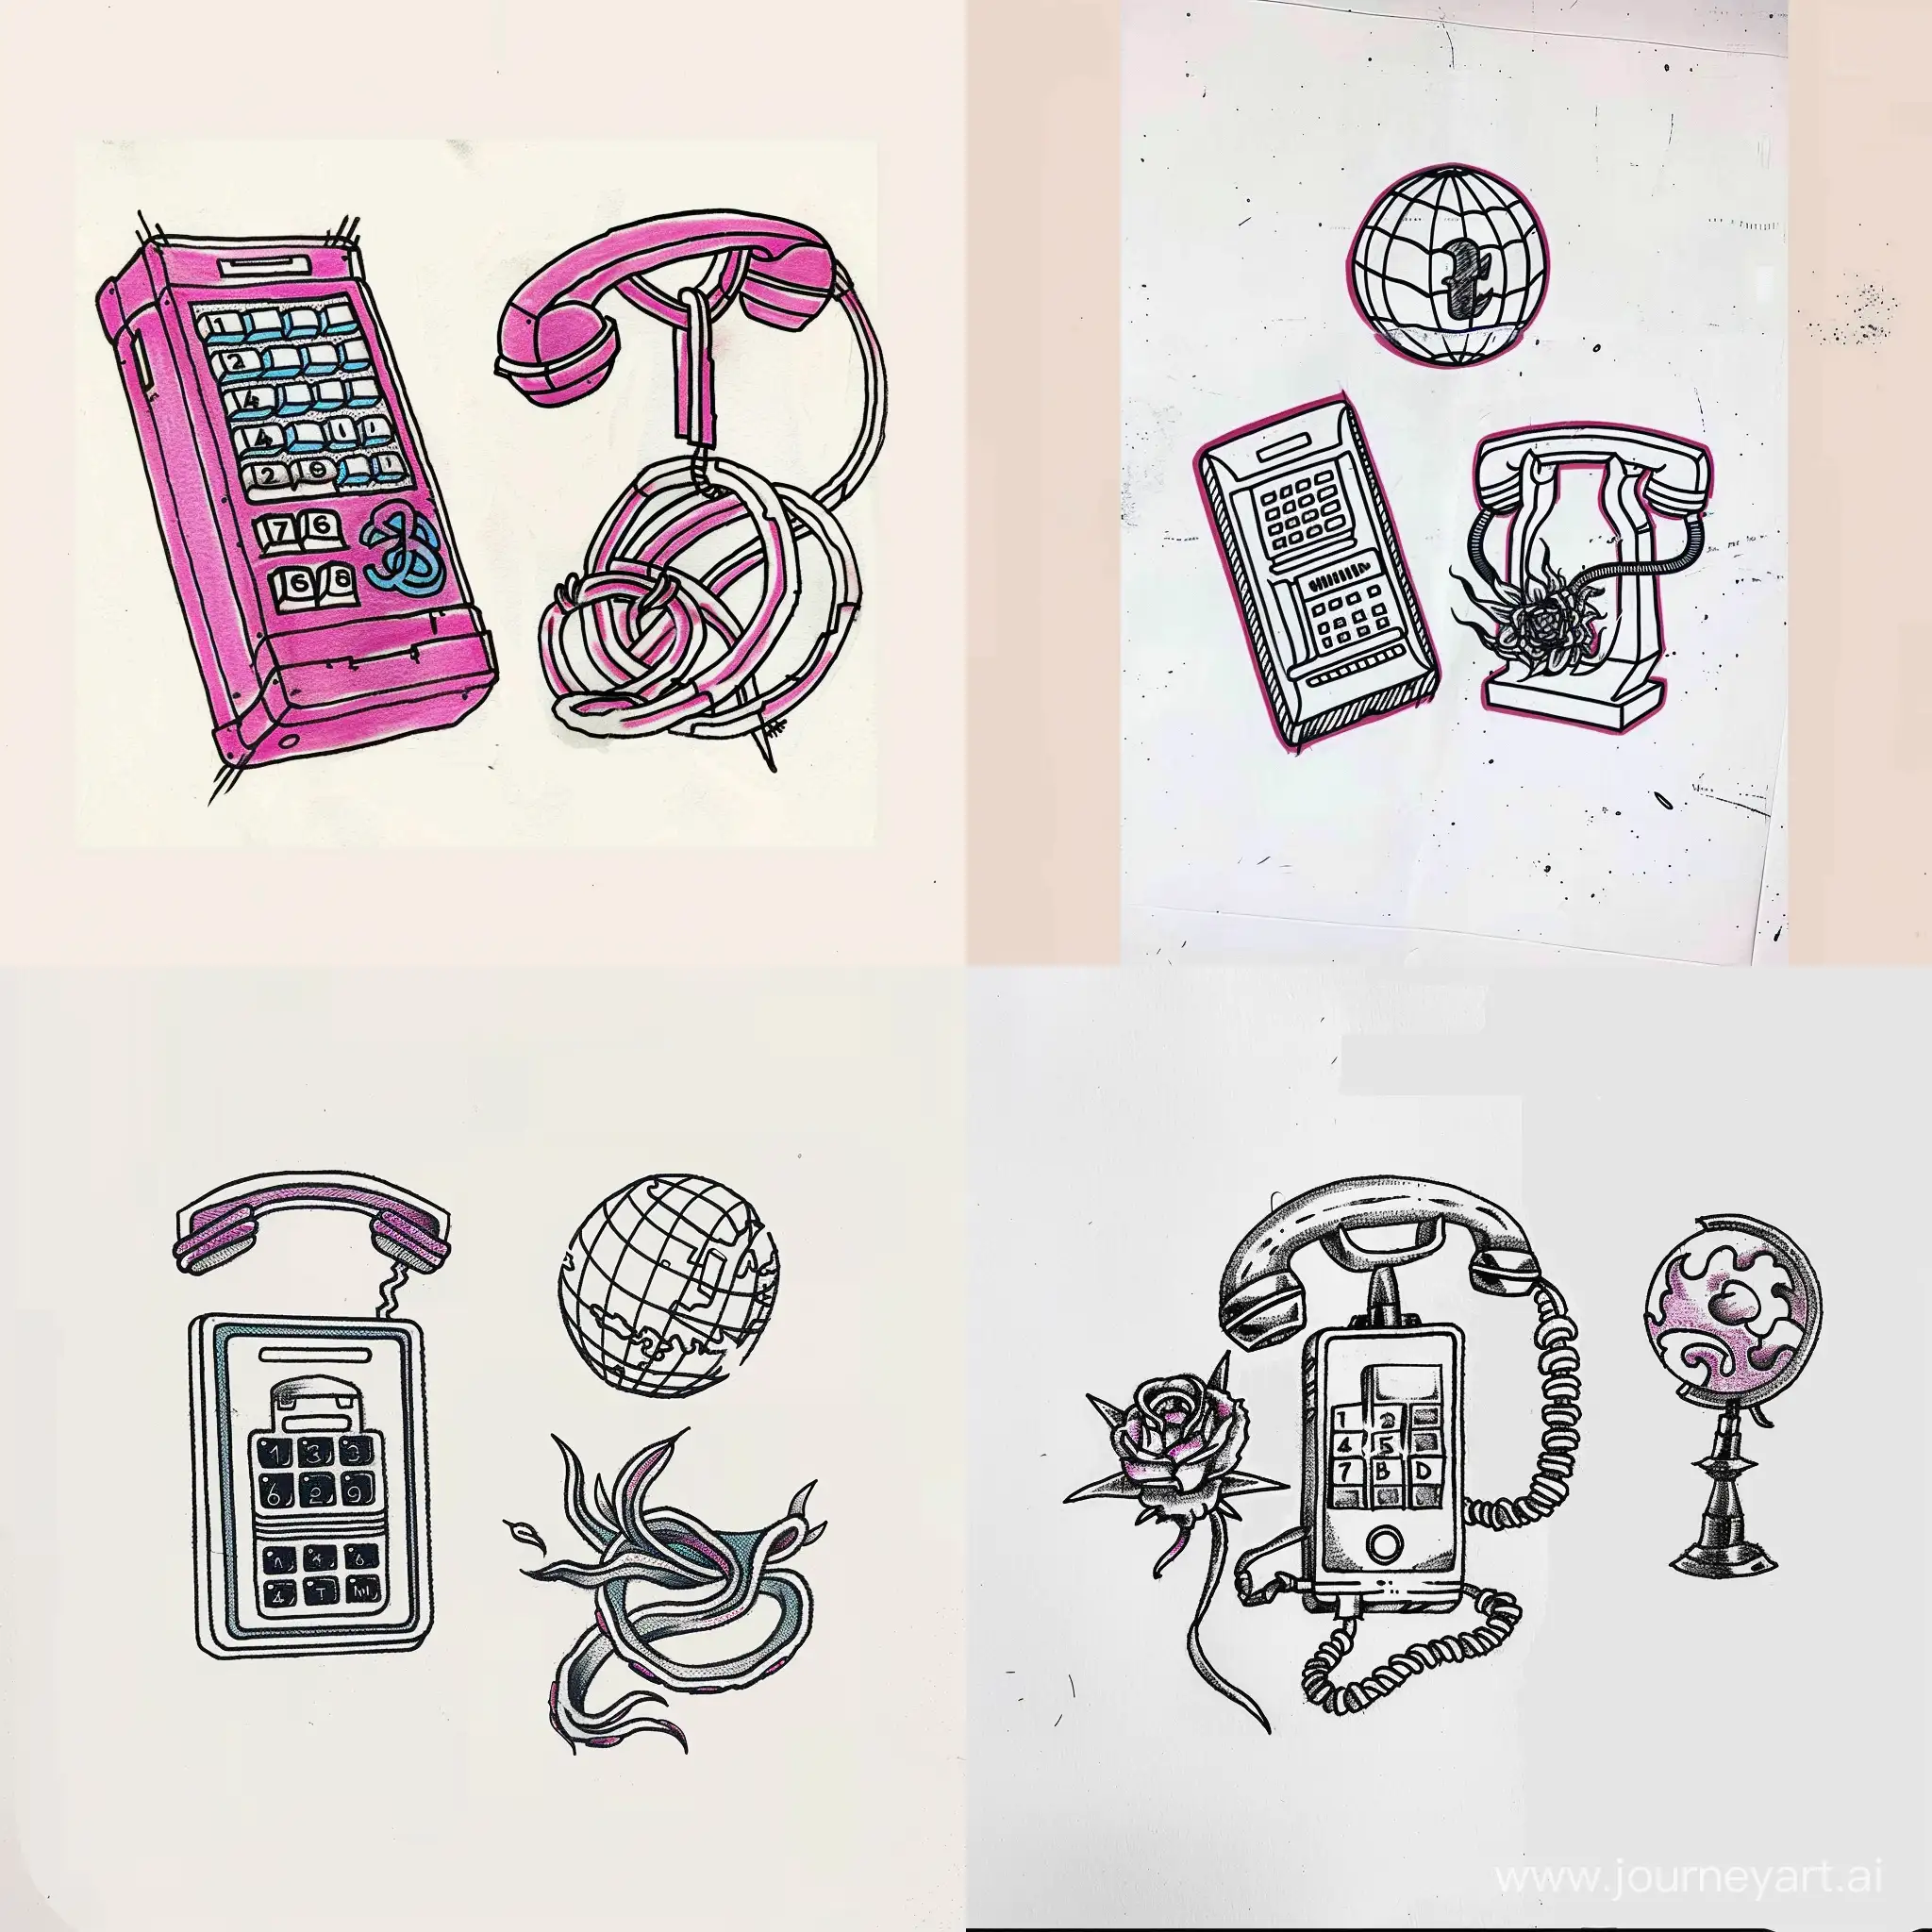 https://i.postimg.cc/Hs1F8bDK/tattoooo.png tattoo sketch of retro cell phone, rap aesthetics